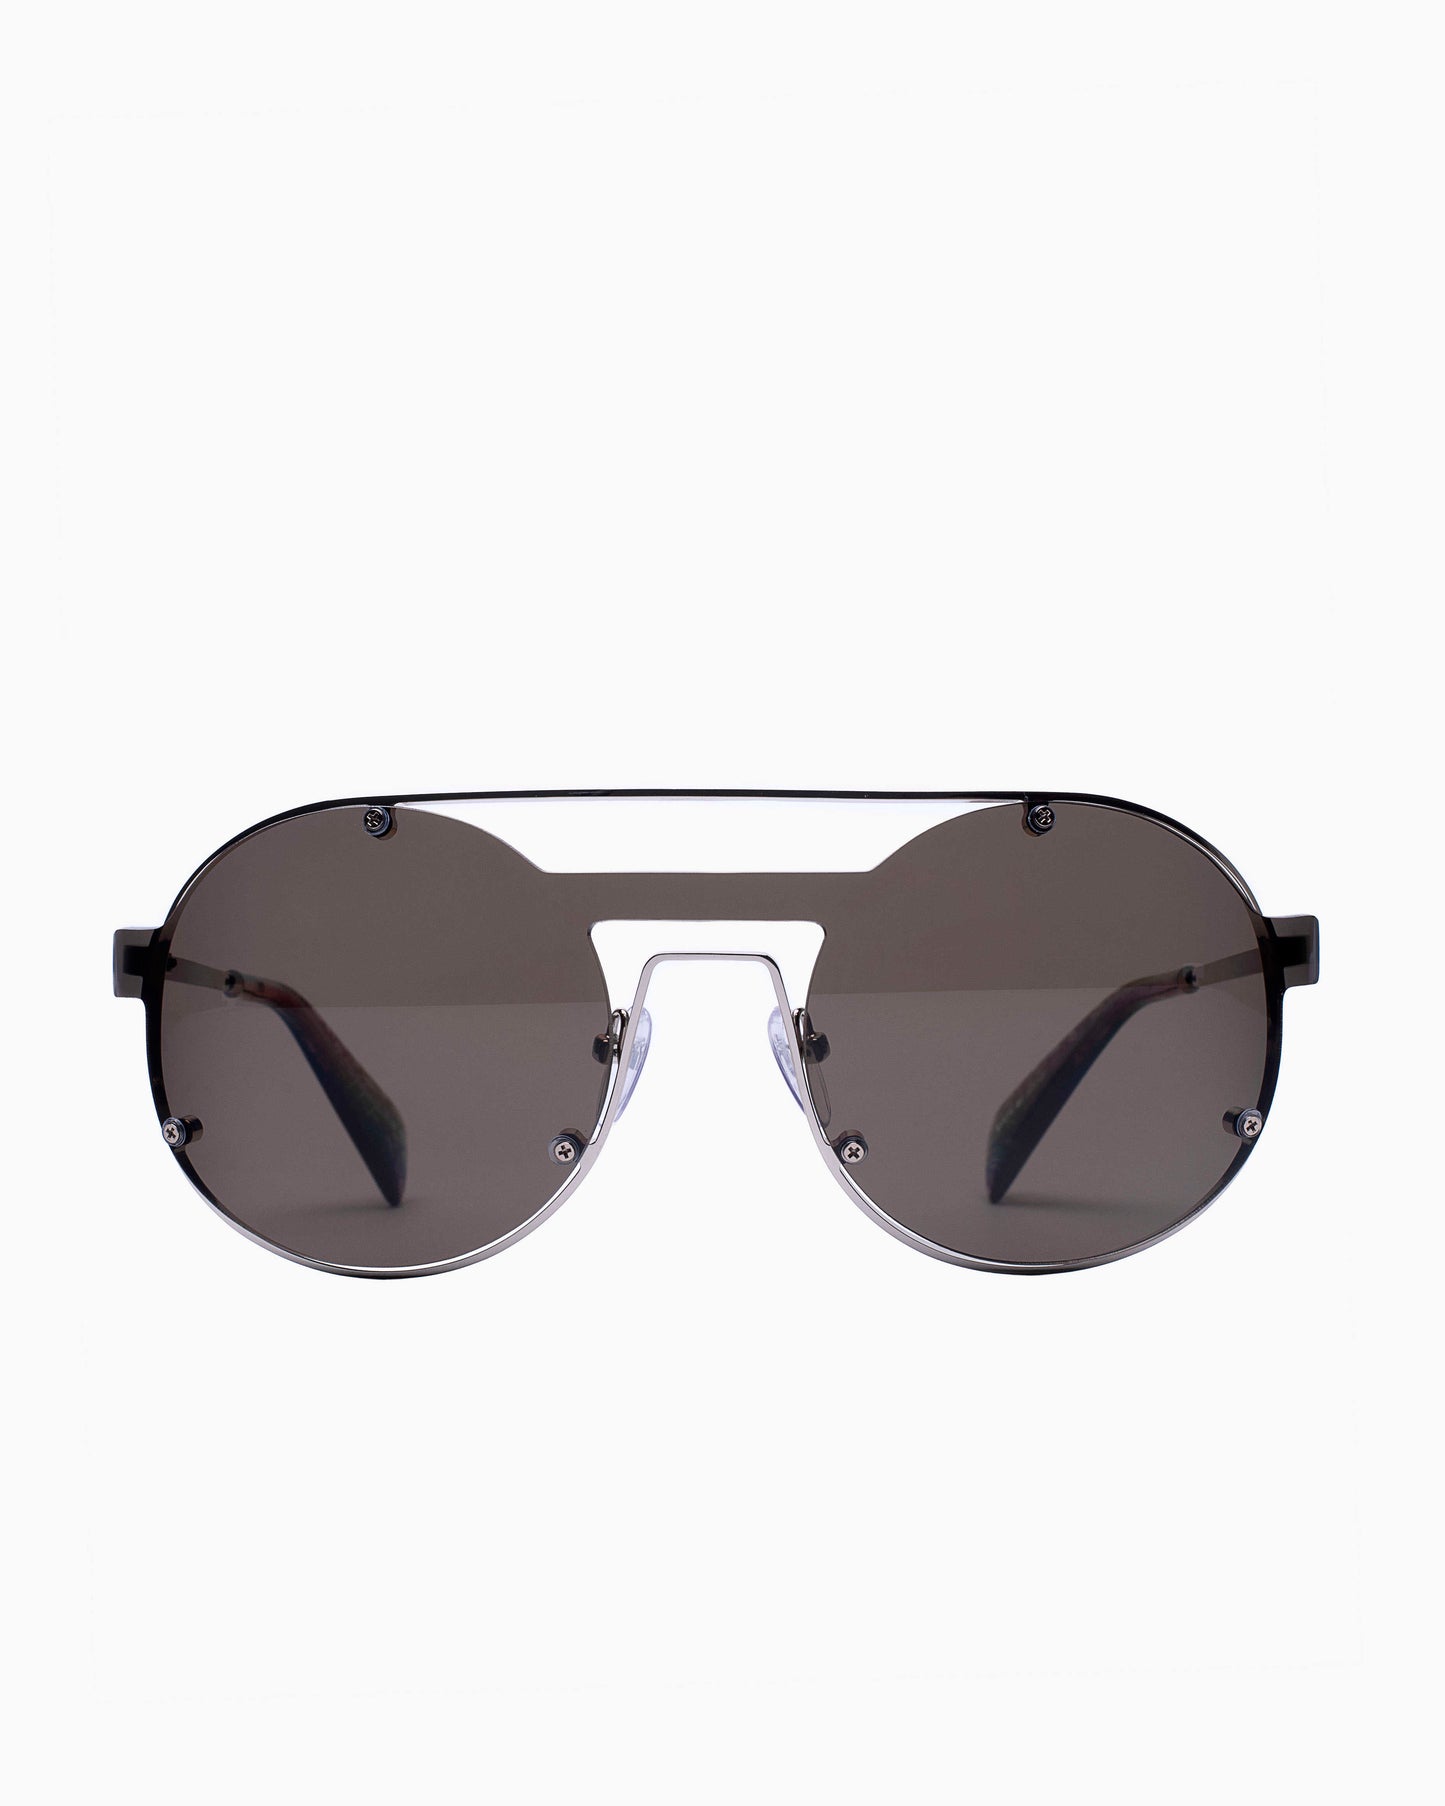 Yohji Yamamoto - 7026 - 479 | glasses bar